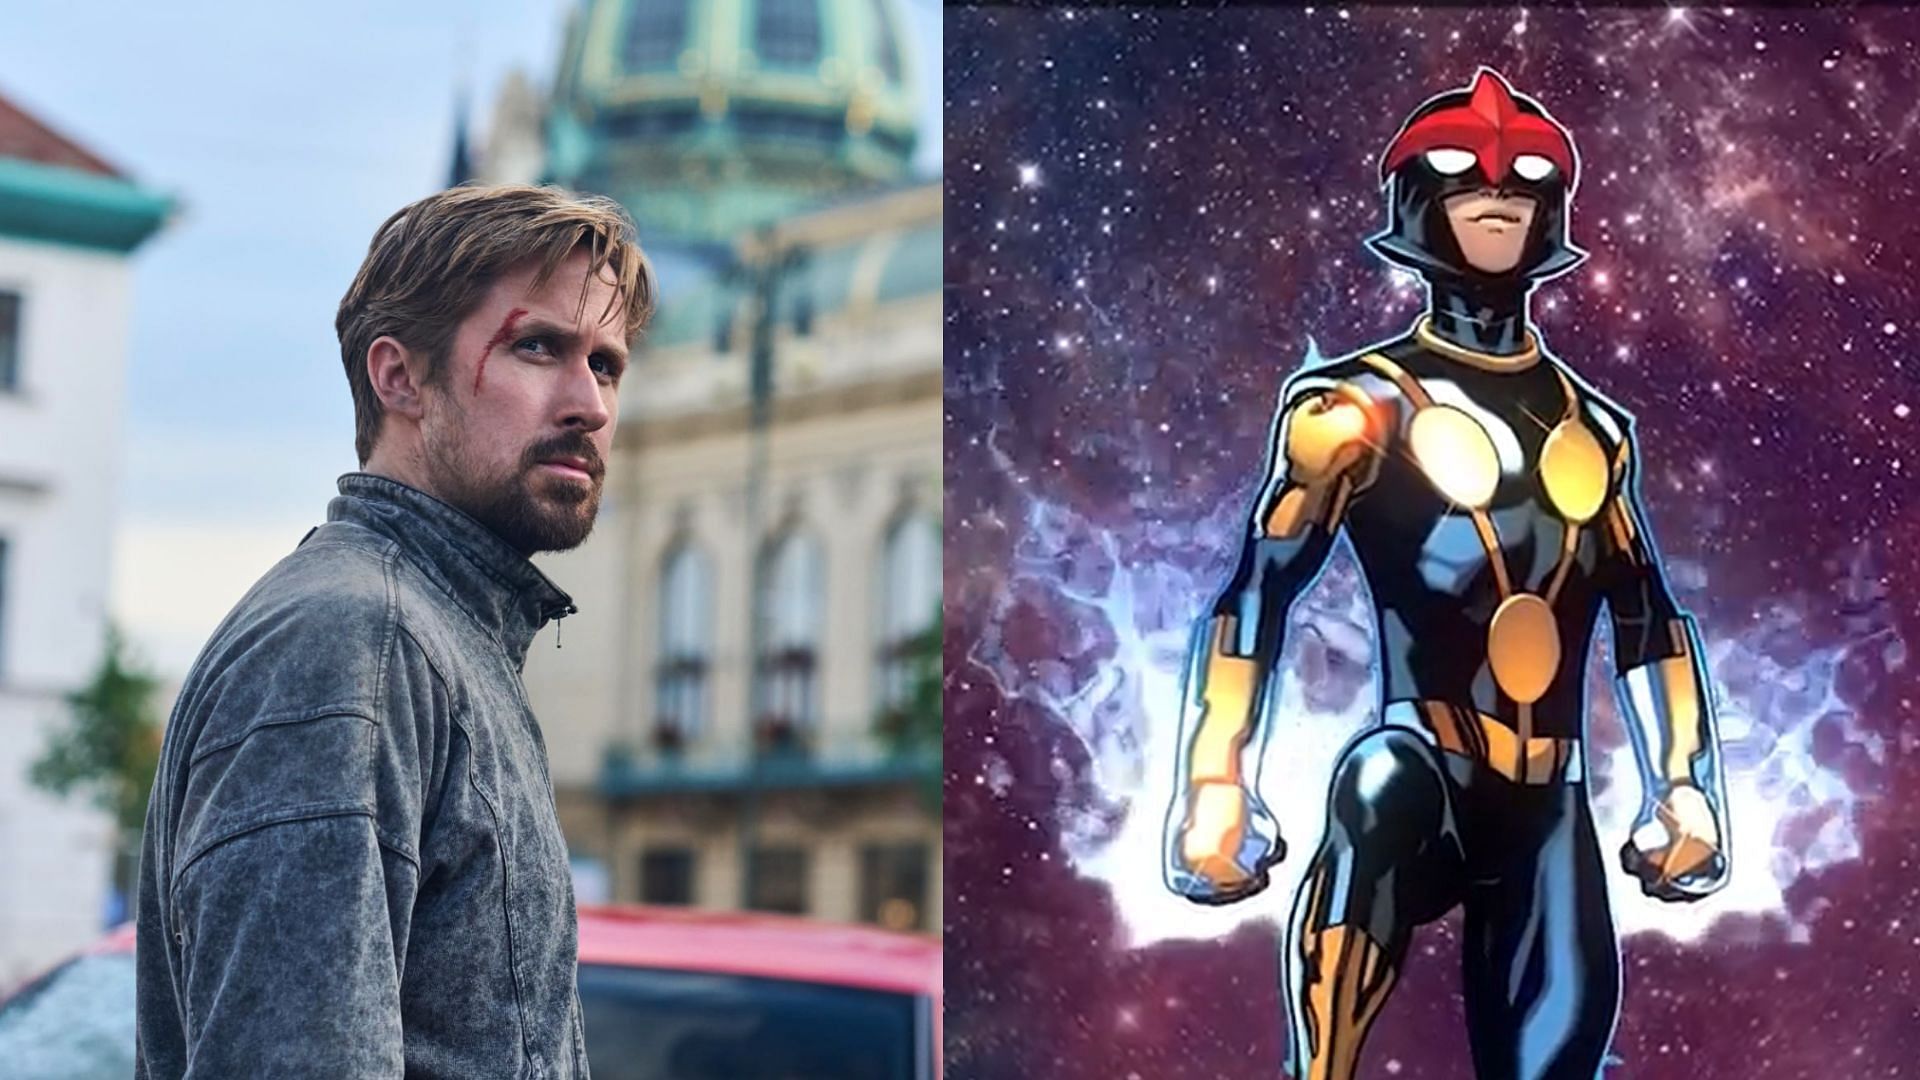 Ryan Gosling may play Marvel